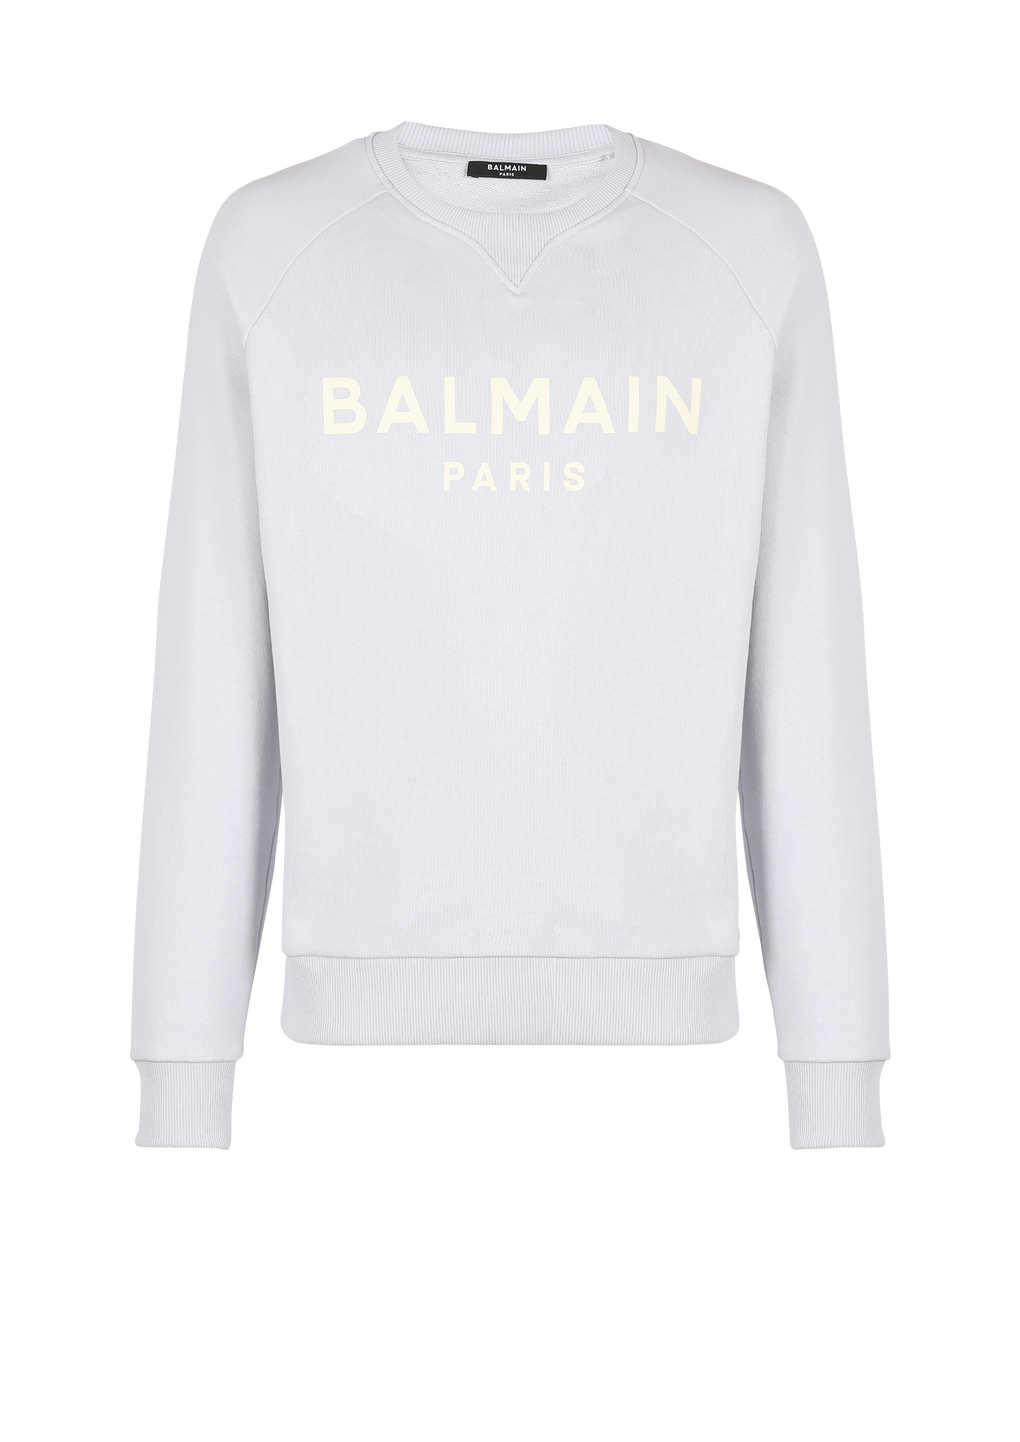 Cotton printed Balmain logo sweatshirt, blue, hi-res